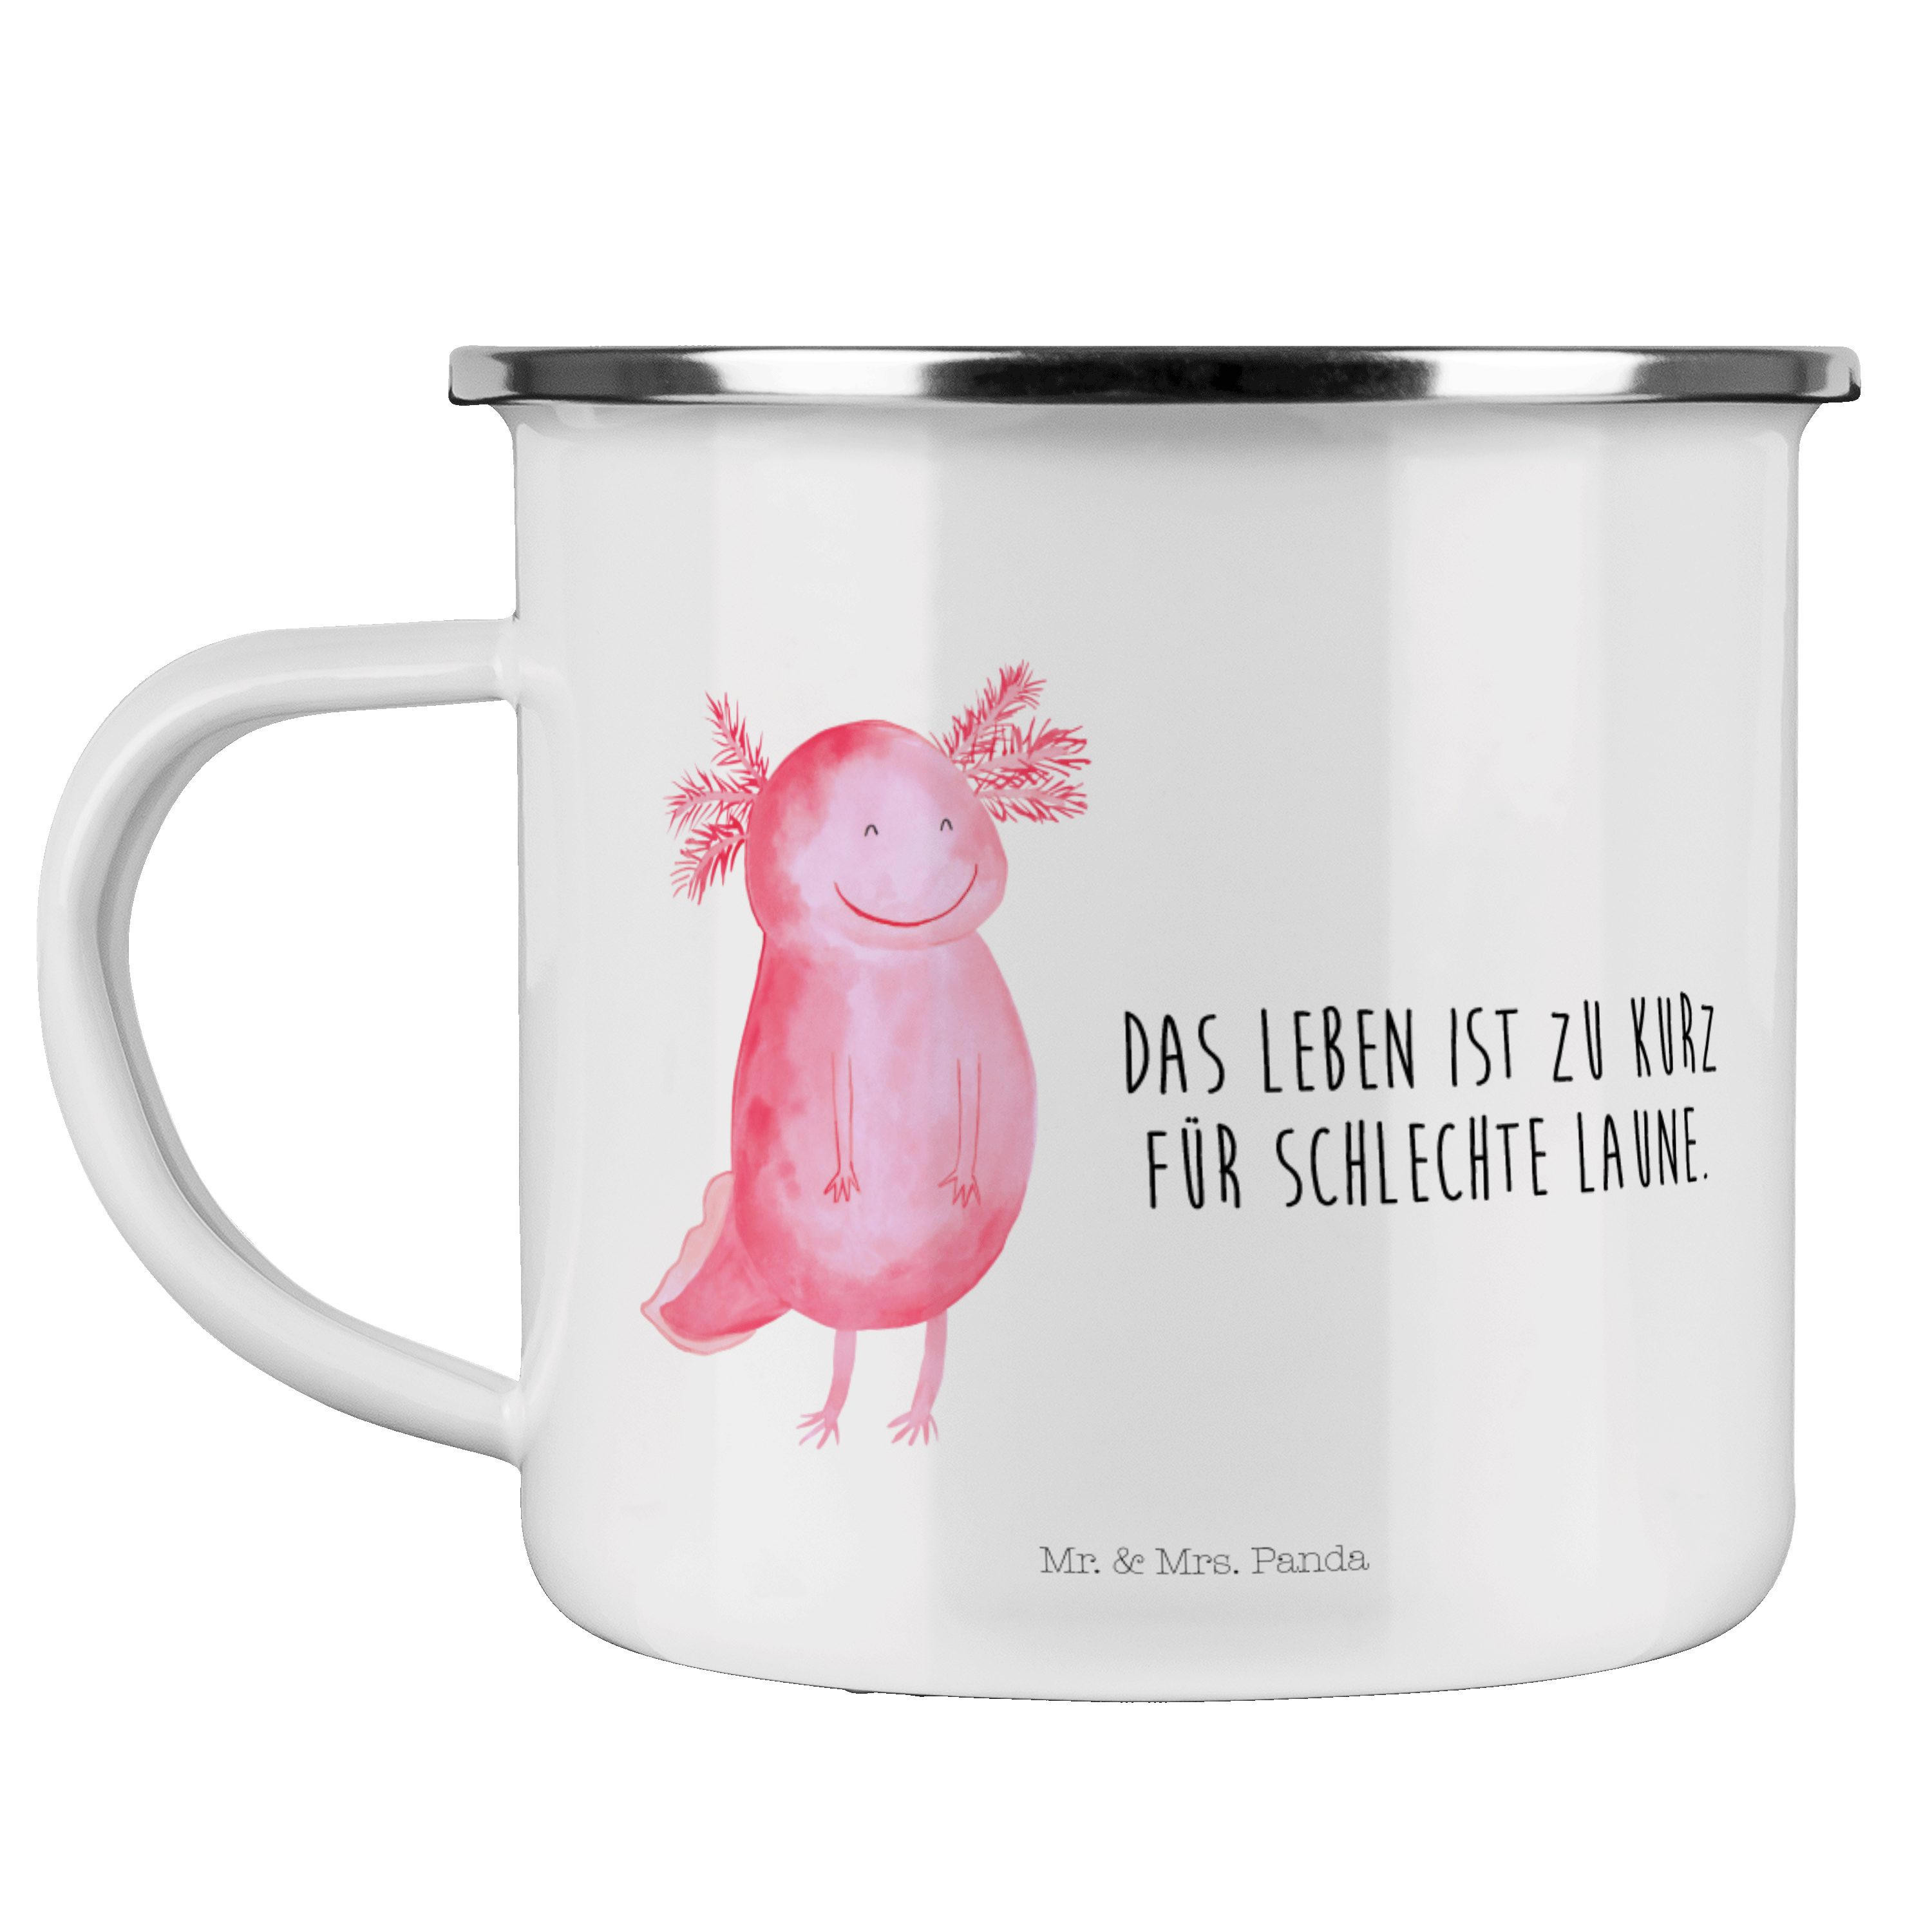 Mr. & Mrs. Panda Becher Axolotl glücklich - Weiß - Geschenk, gute Laune, Lurch, Molch, Kaffee, Emaille